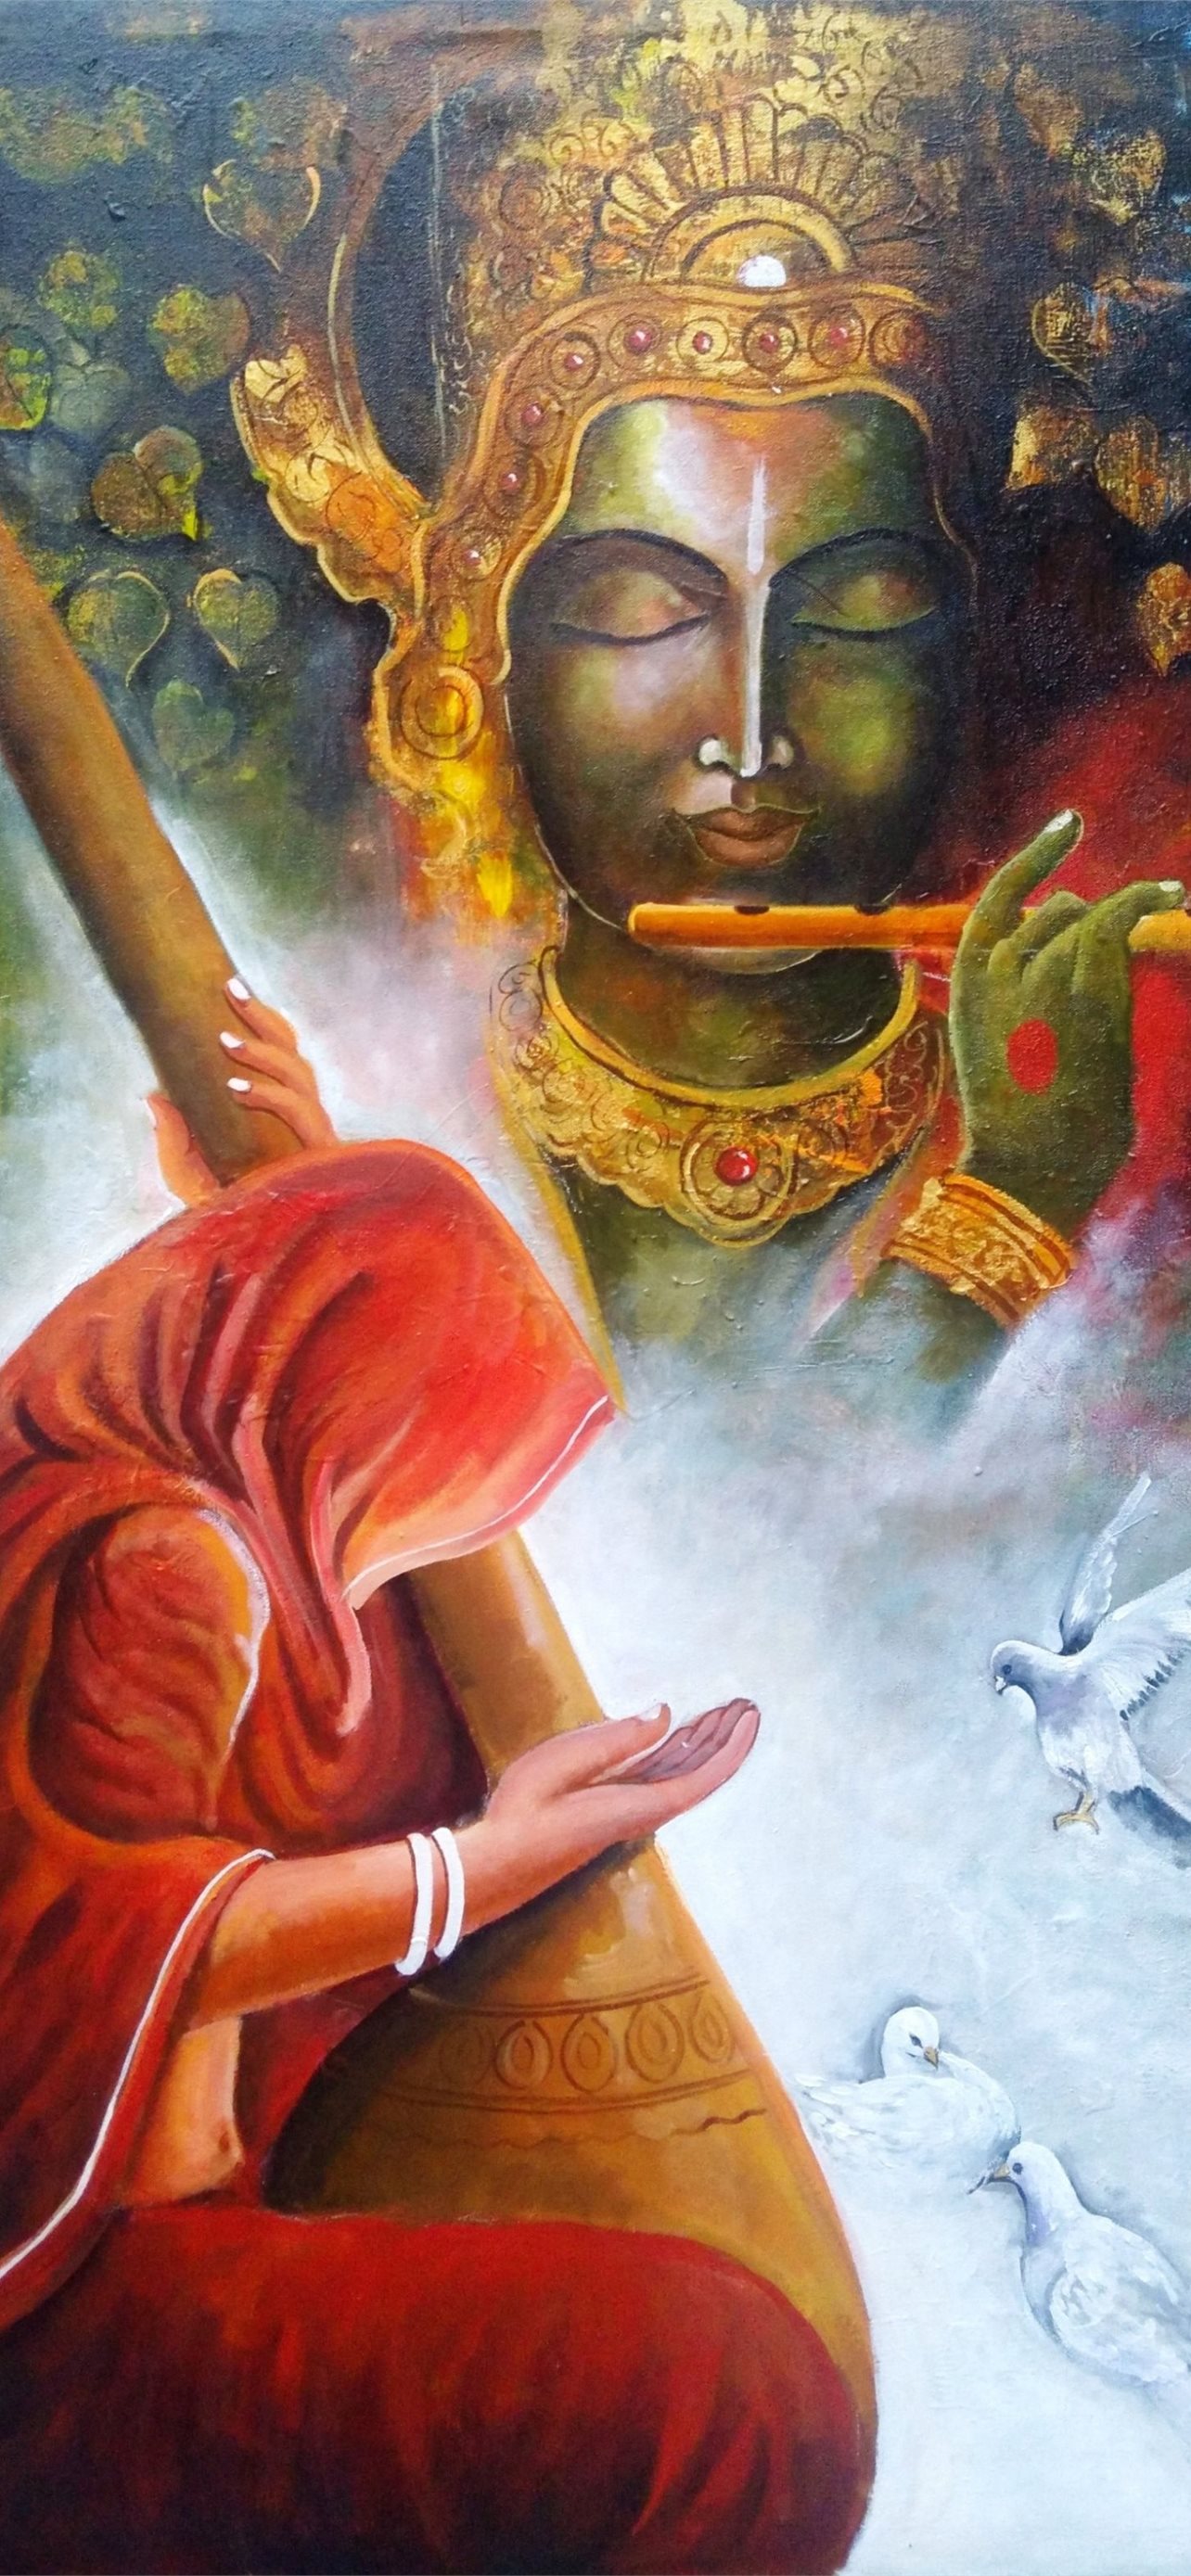 Painting Krishna God Image top iPhone Wallpaper Free Download